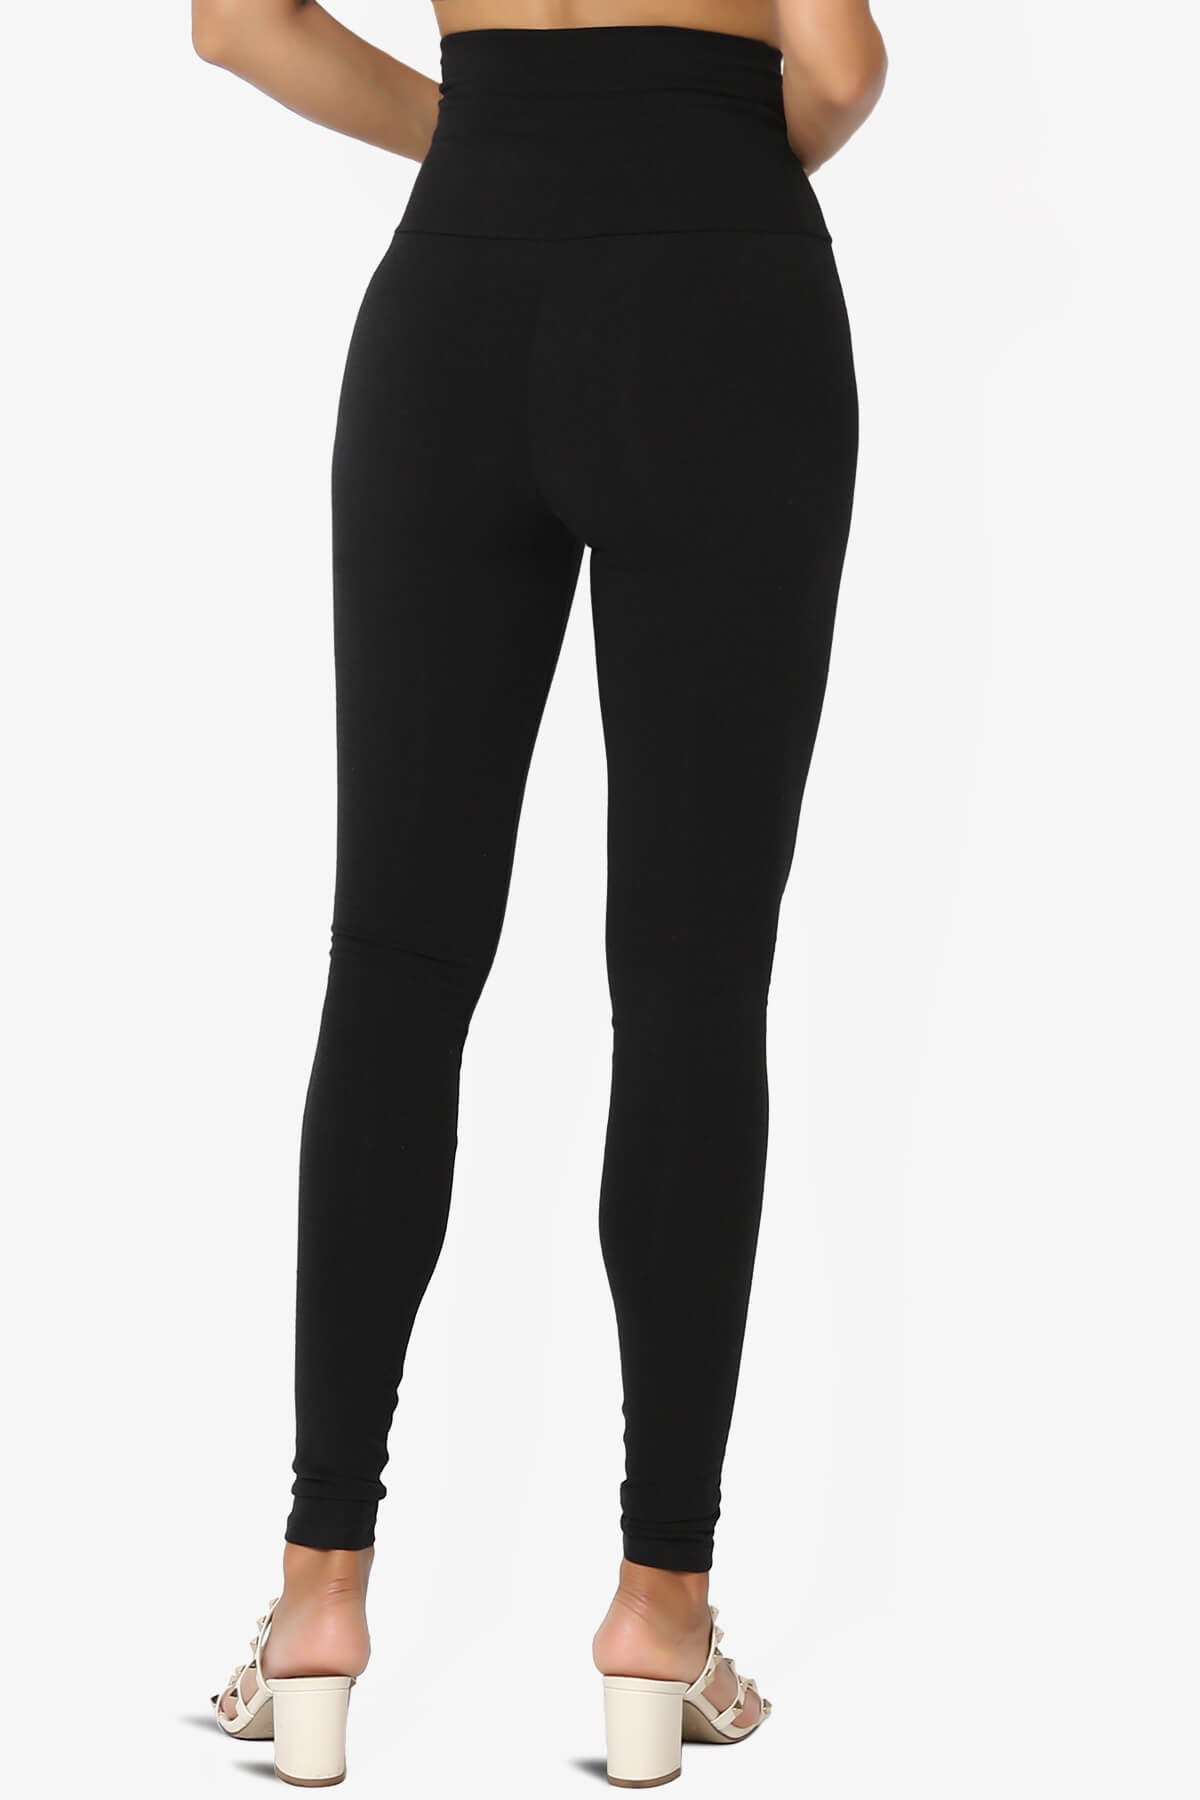 Mono b leggings XL-3X foil with side pockets $30